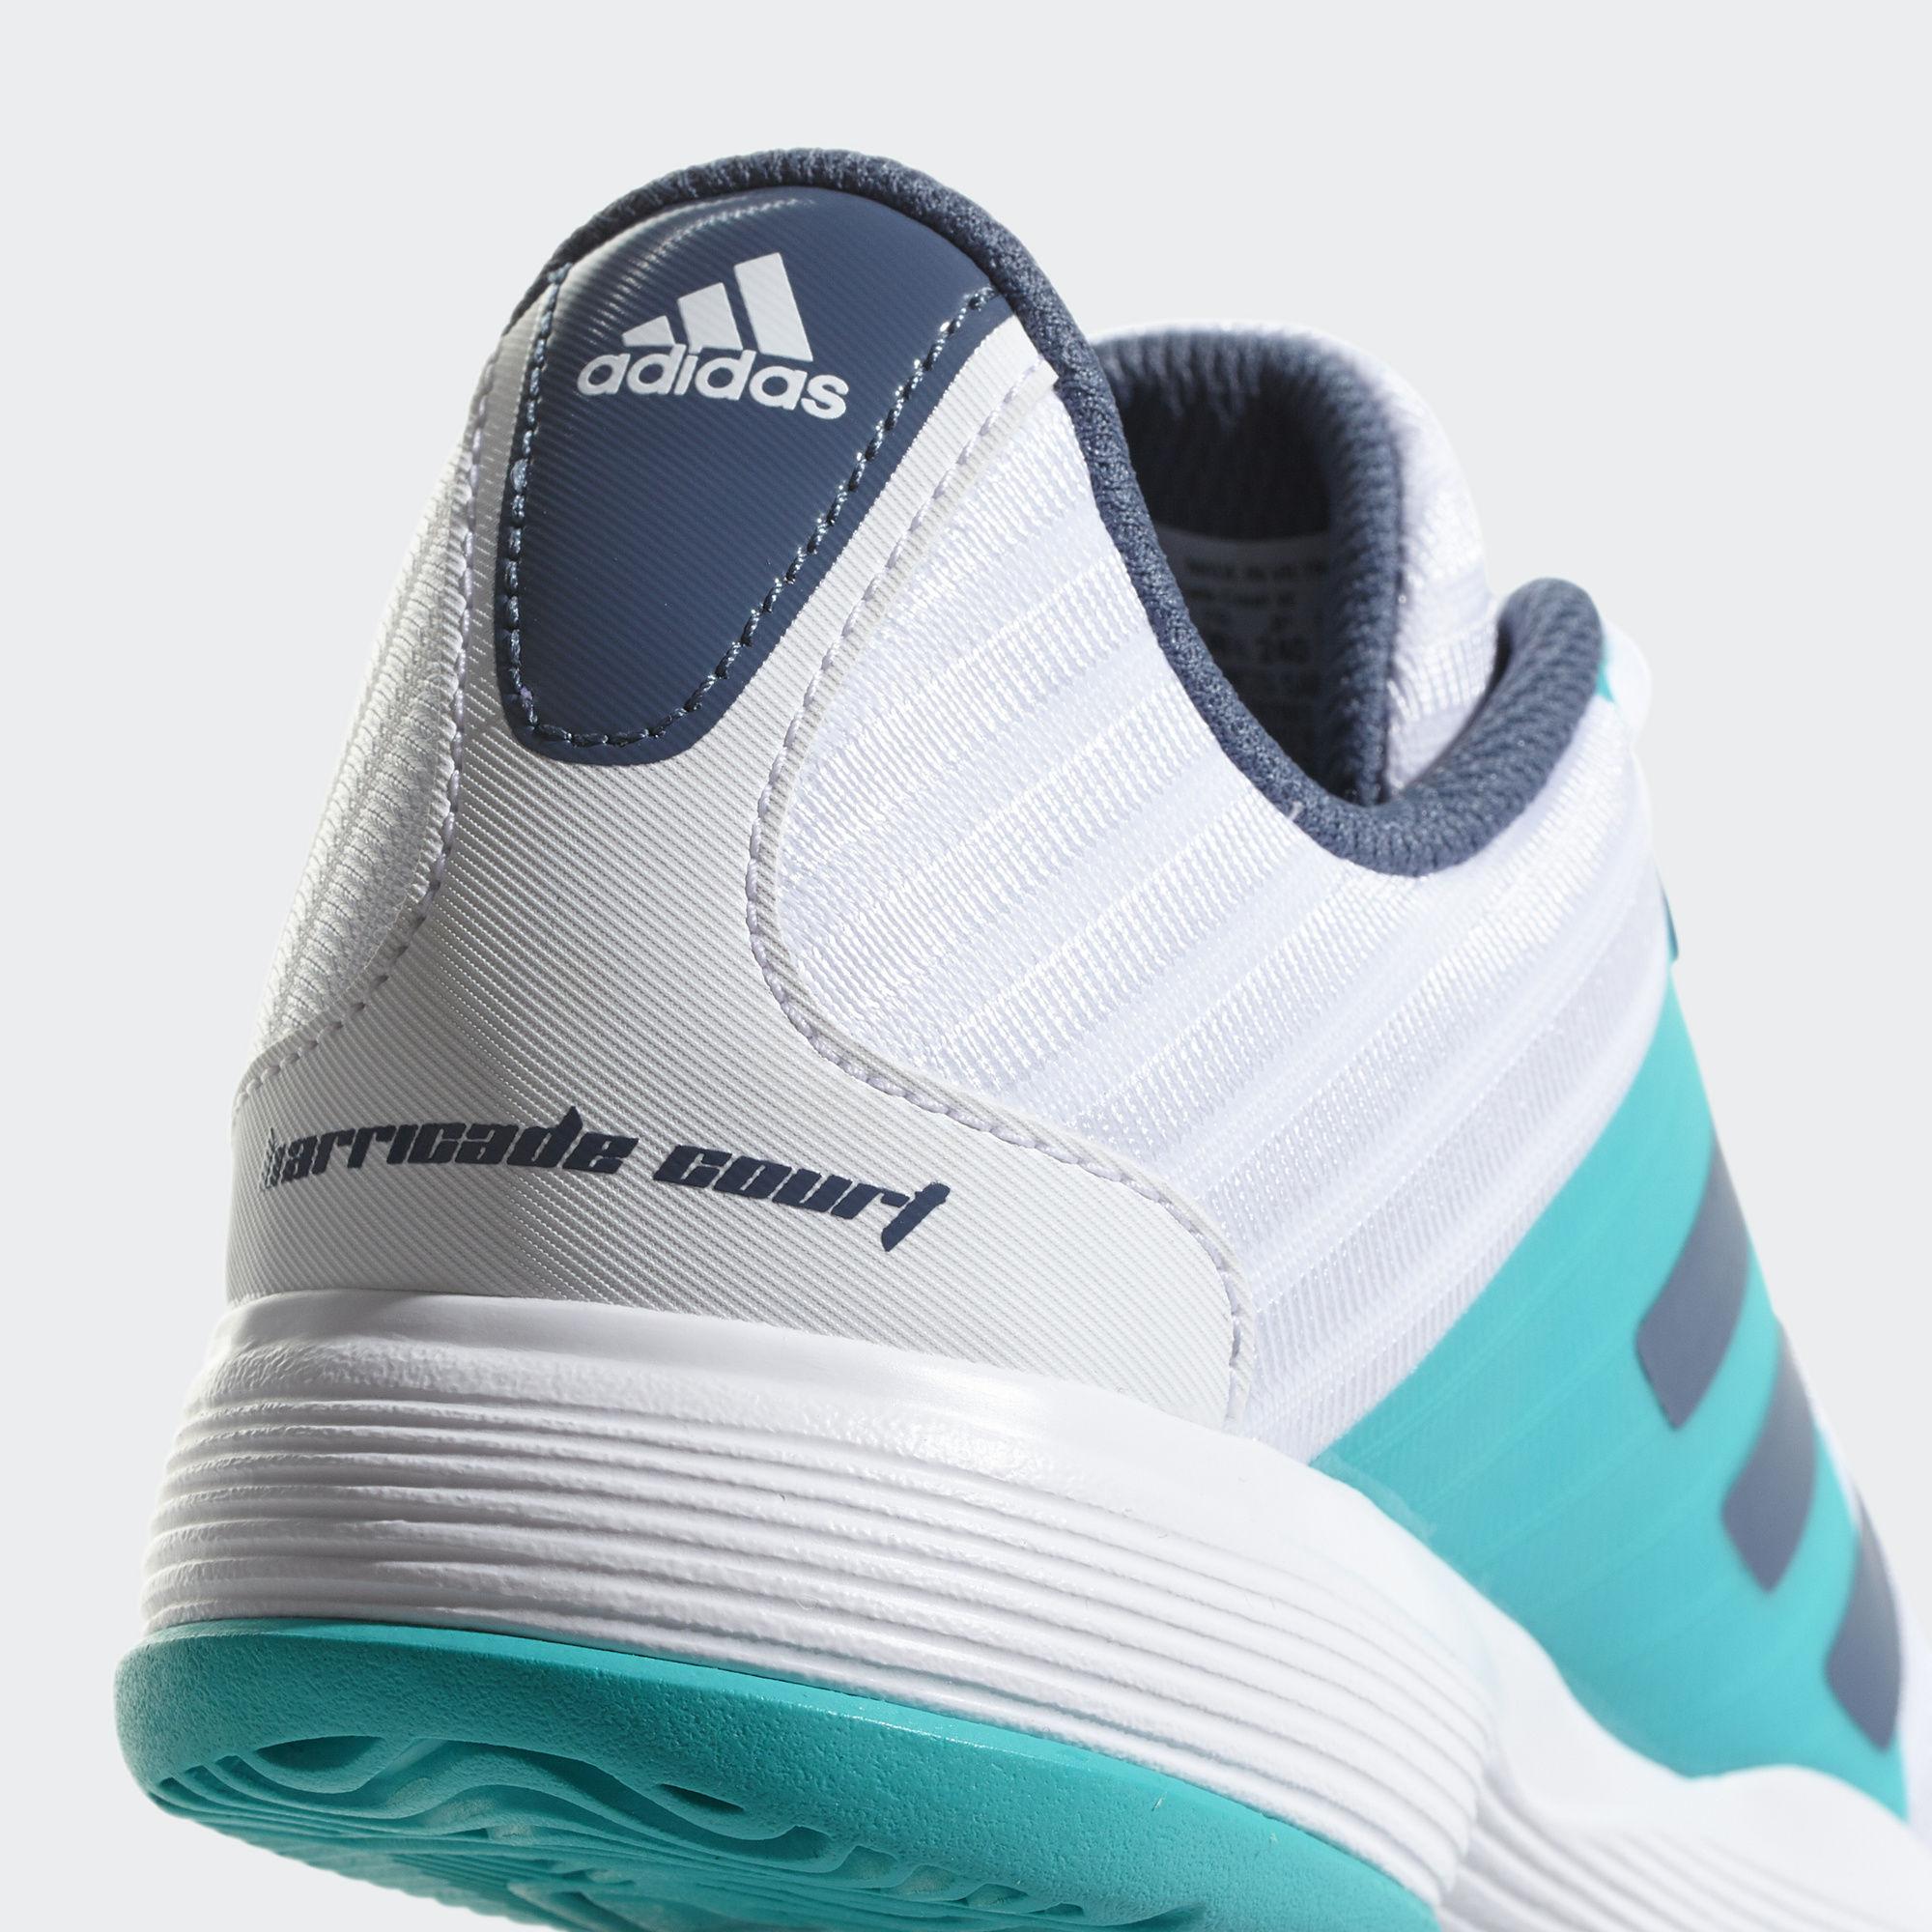 Adidas Womens Barricade Court Tennis Shoes White/Blue